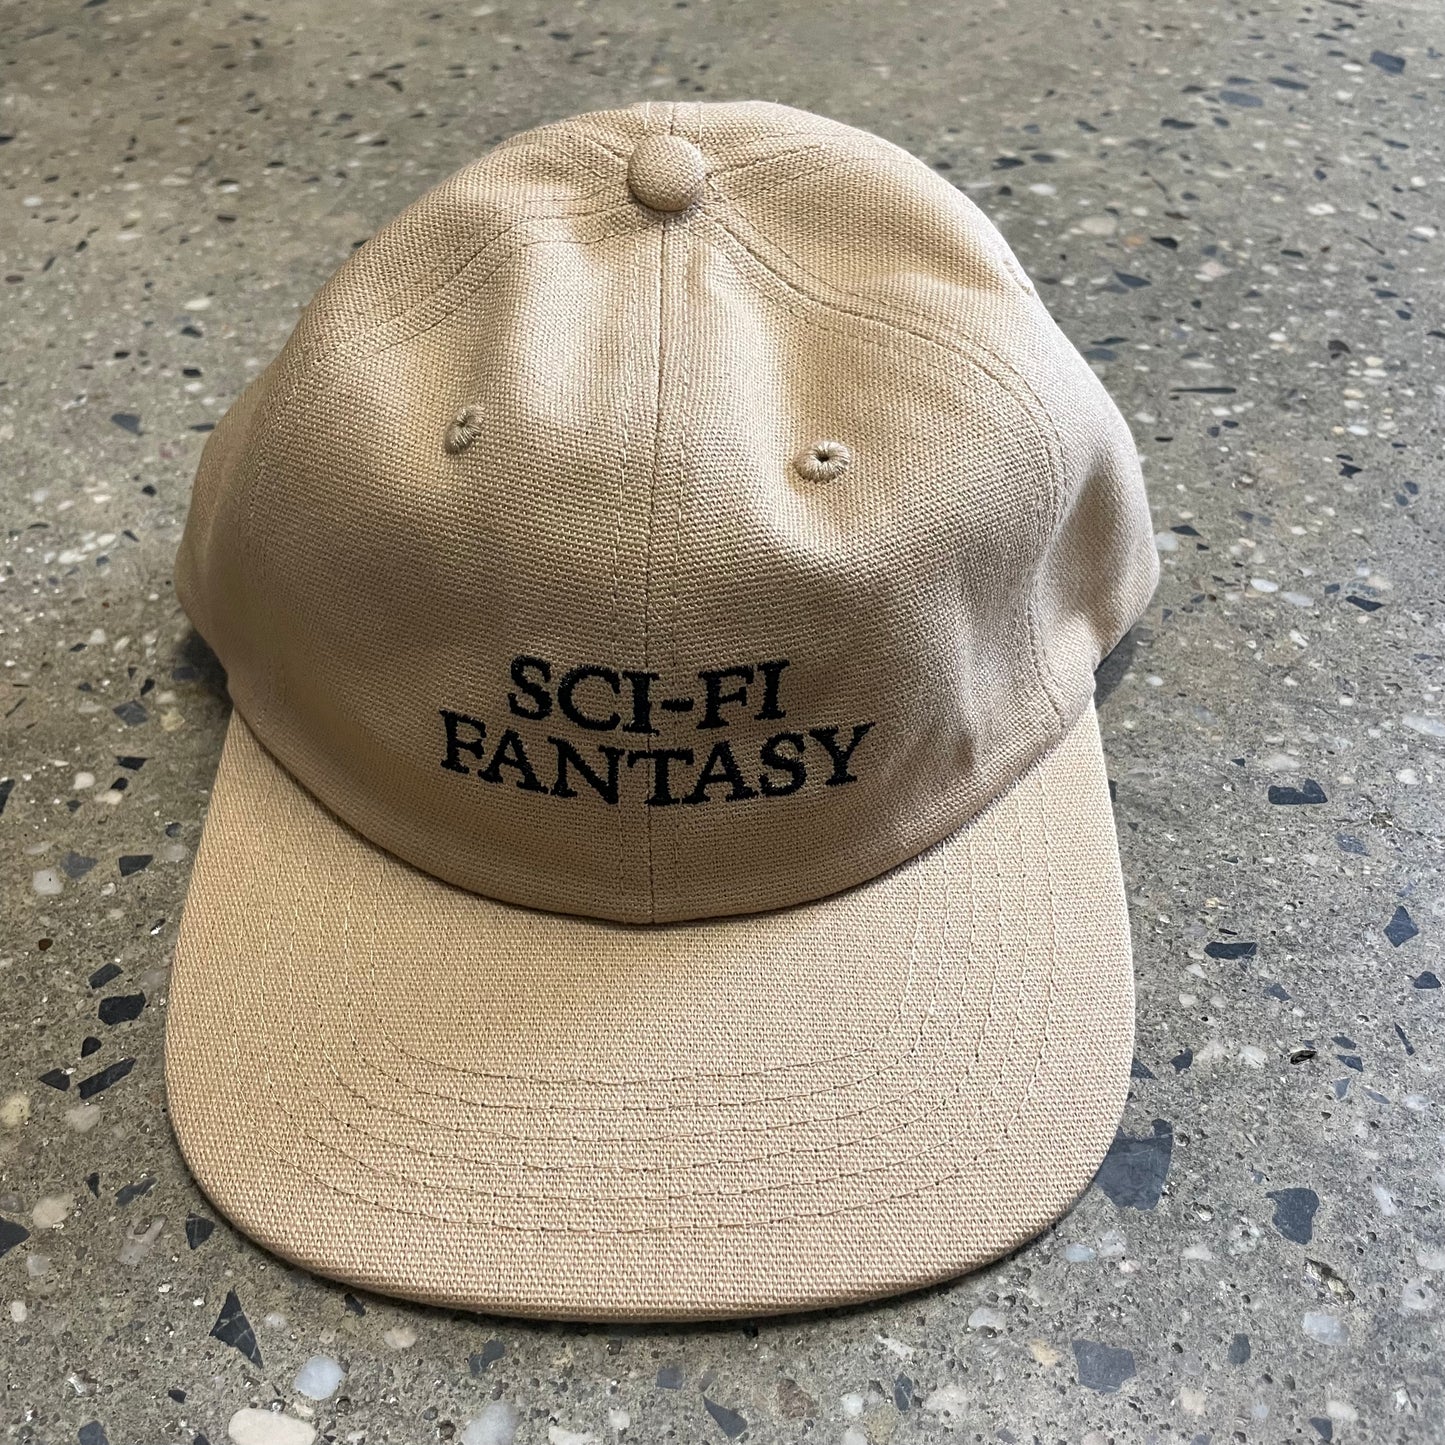 Sci-Fi Fantasy Logo Hat - Khaki